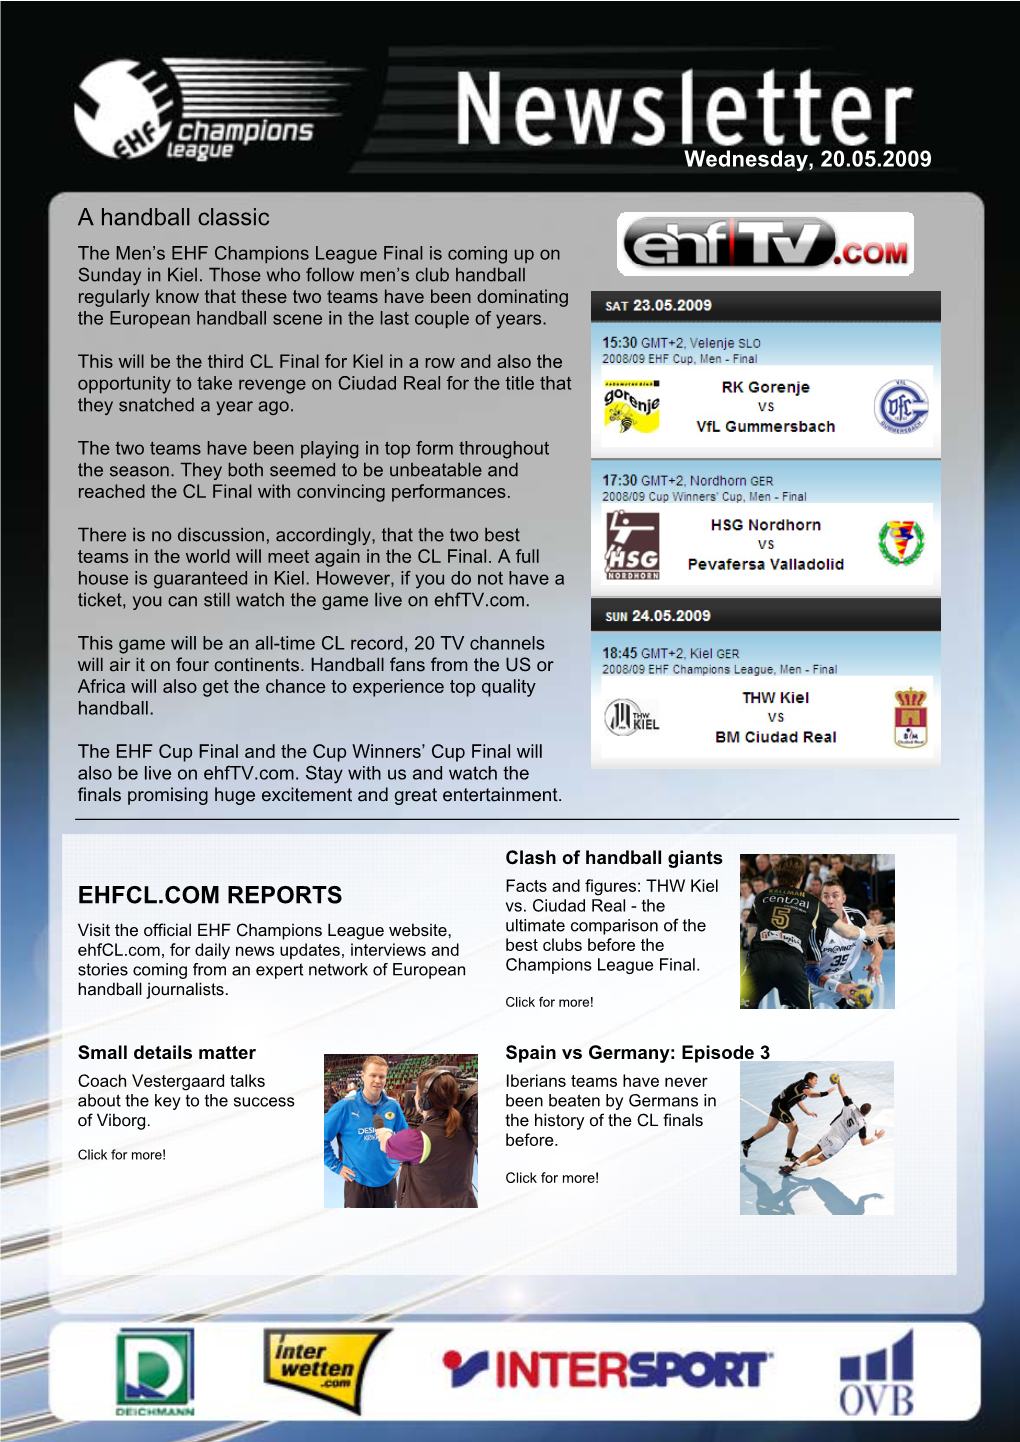 A Handball Classic EHFCL.COM REPORTS